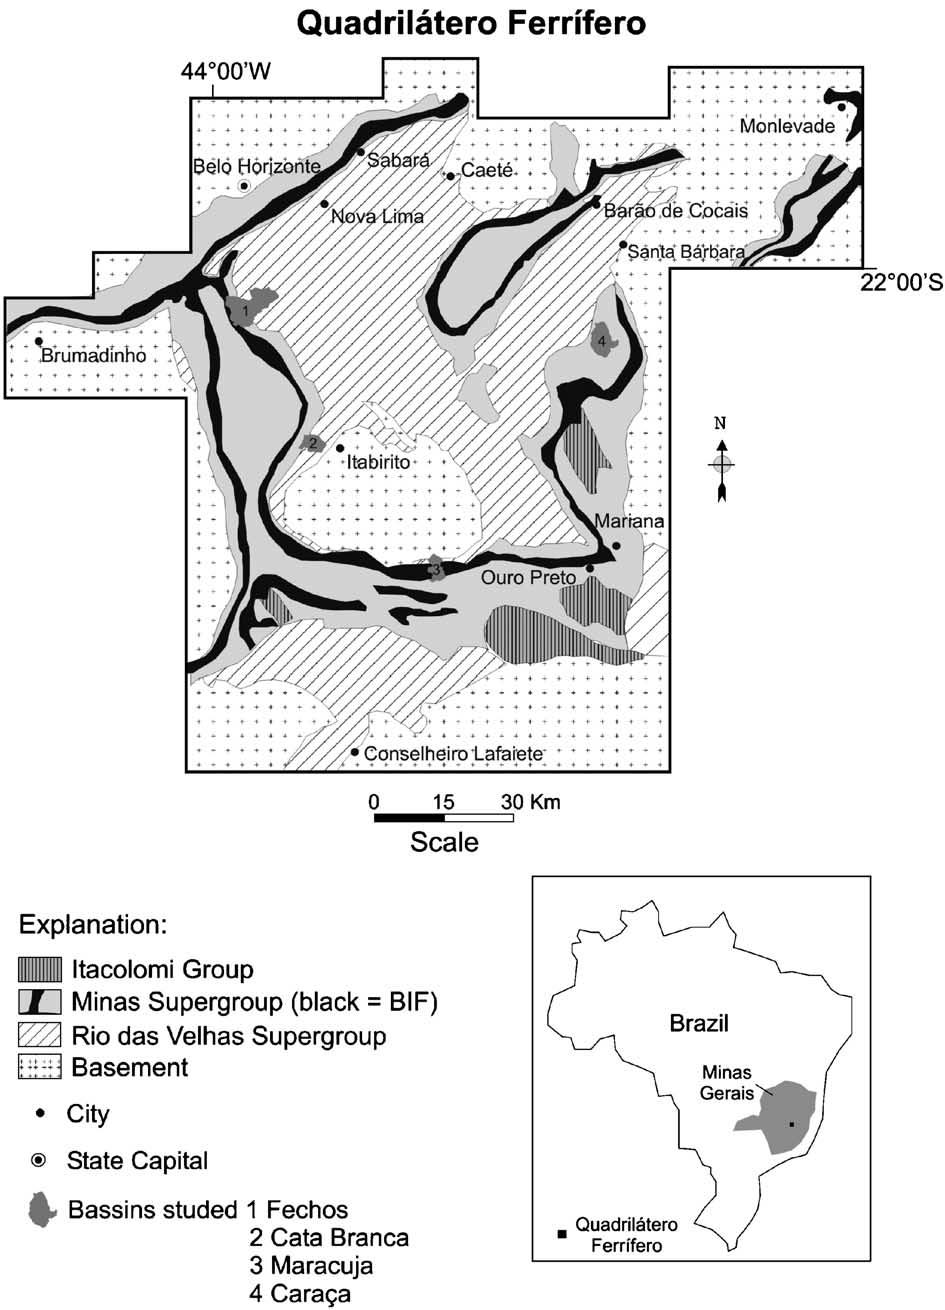 314 A.A.R. Salgado et al. / Journal of Geochemical Exploration 88 (2006) 313 317 Fig. 1. Localization of the studied basins and geology of Quadrilátero Ferrífero by Alkmim and Marshak (1998).